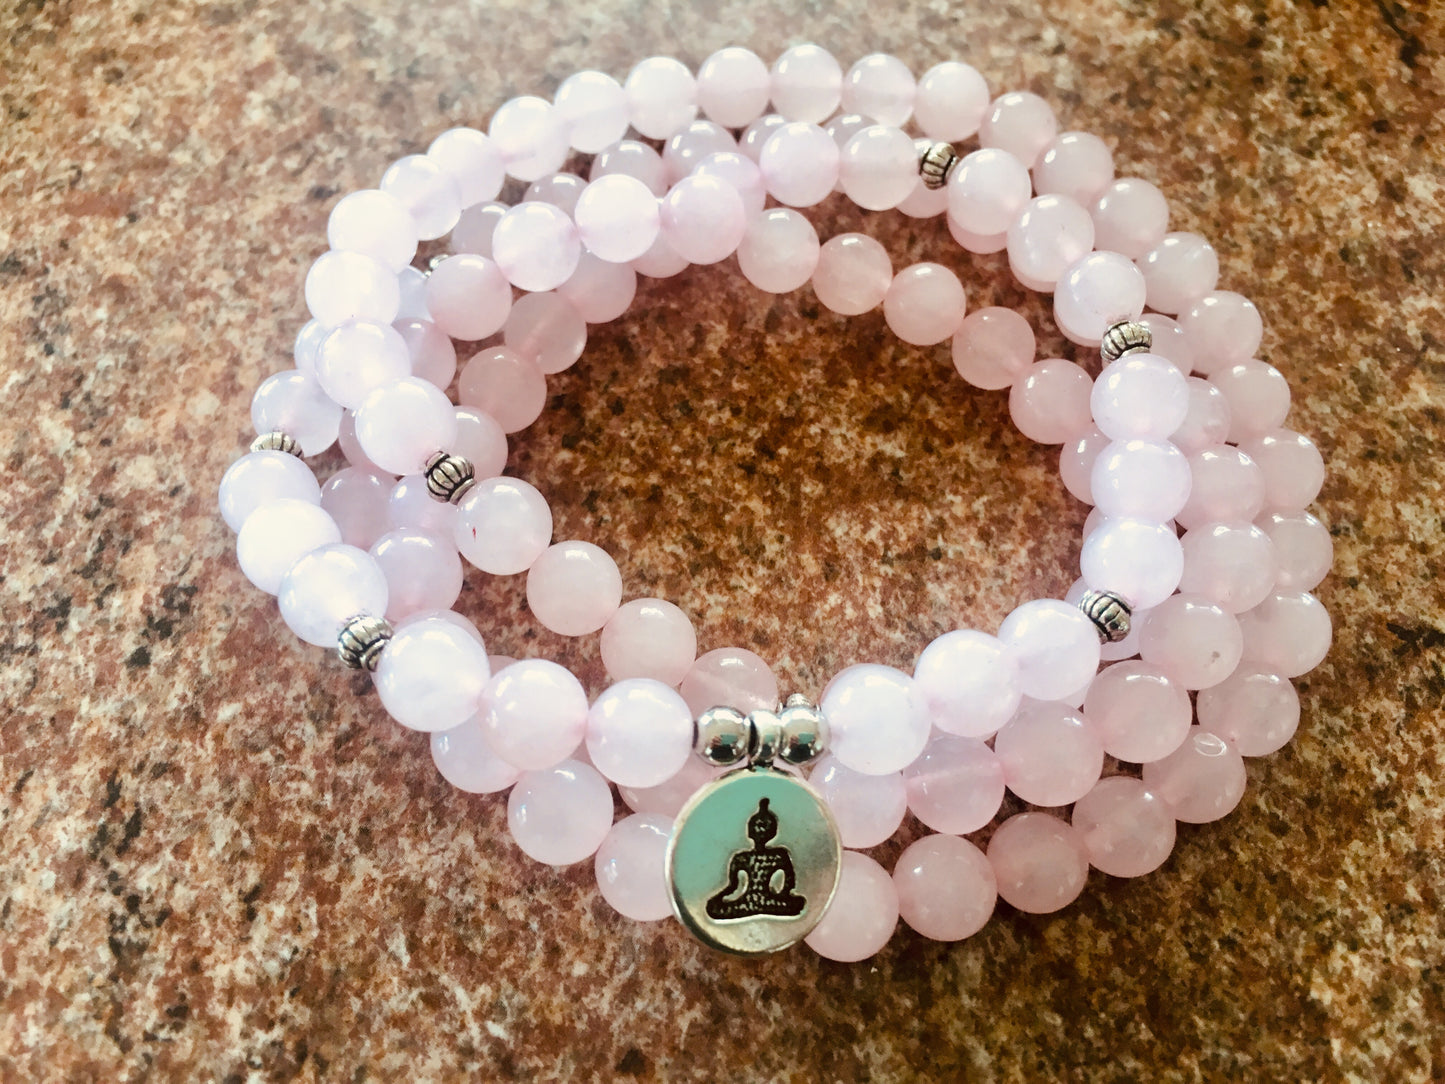 Buddhist Rose Quartz Mala Bracelet/Necklace (108 beads